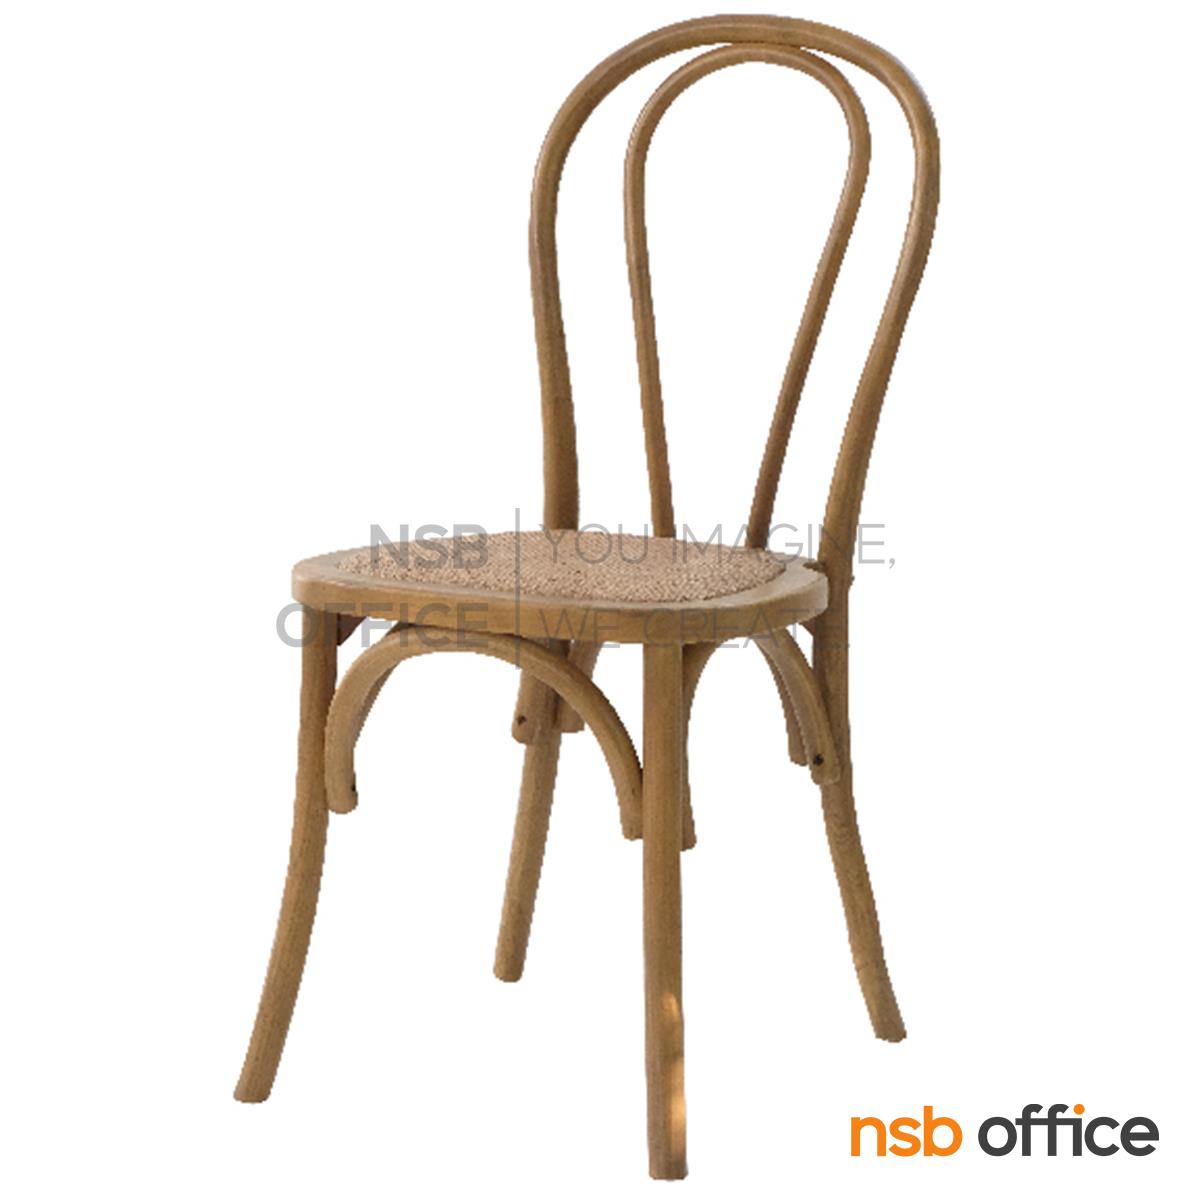 B29A383:เก้าอี้โมเดิร์นไม้ รุ่น Alife (ออลไลฟ์)  โครงไม้ เบาะหวายสาน